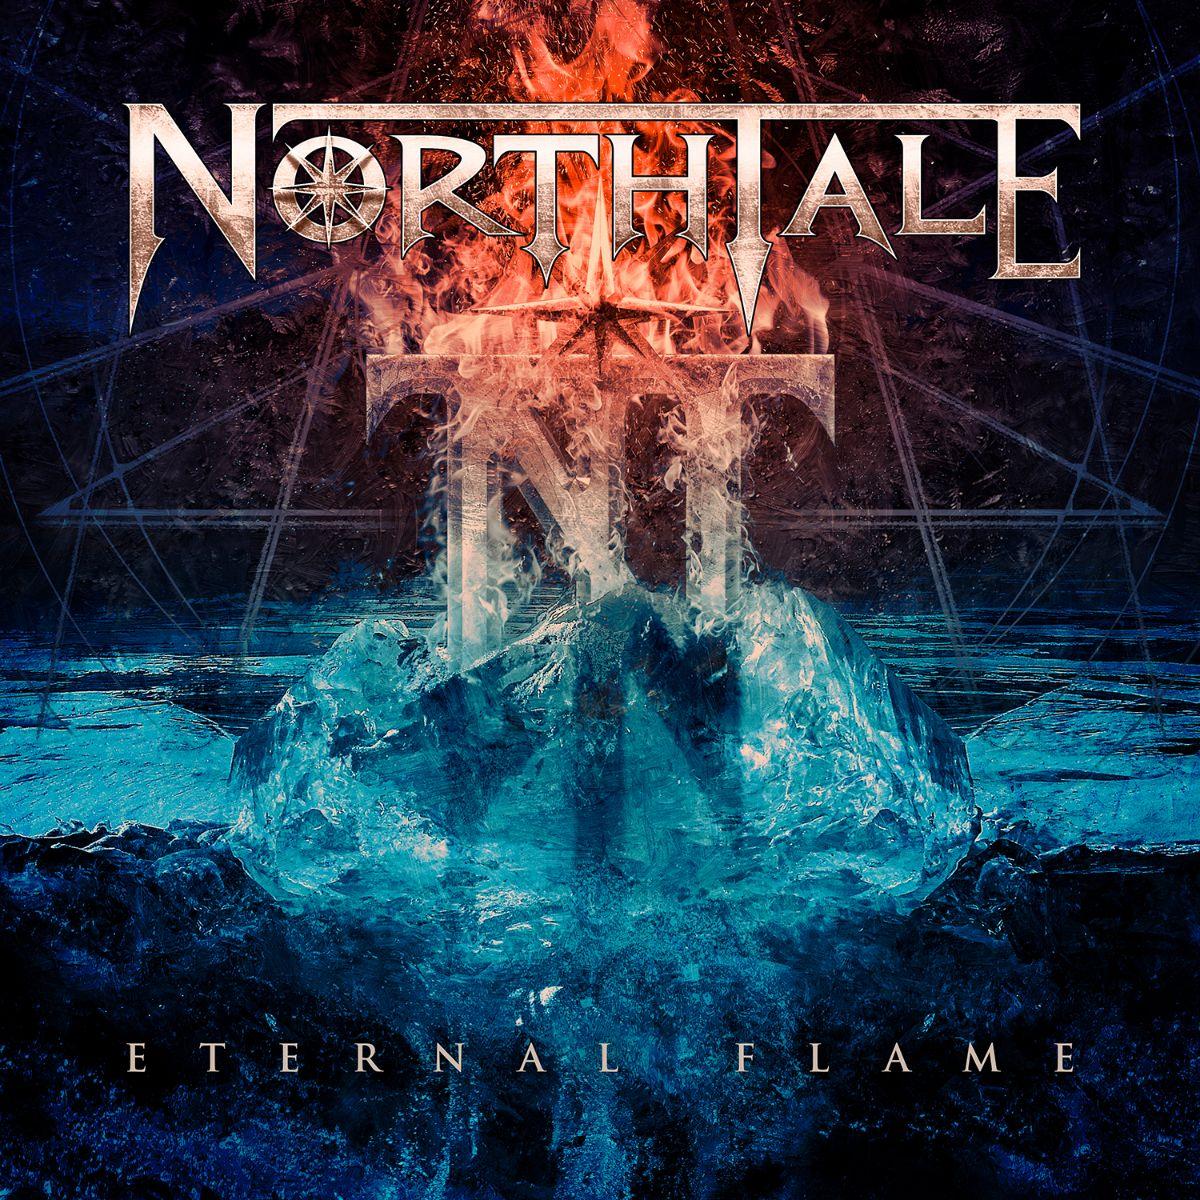 Eternal flame northtale